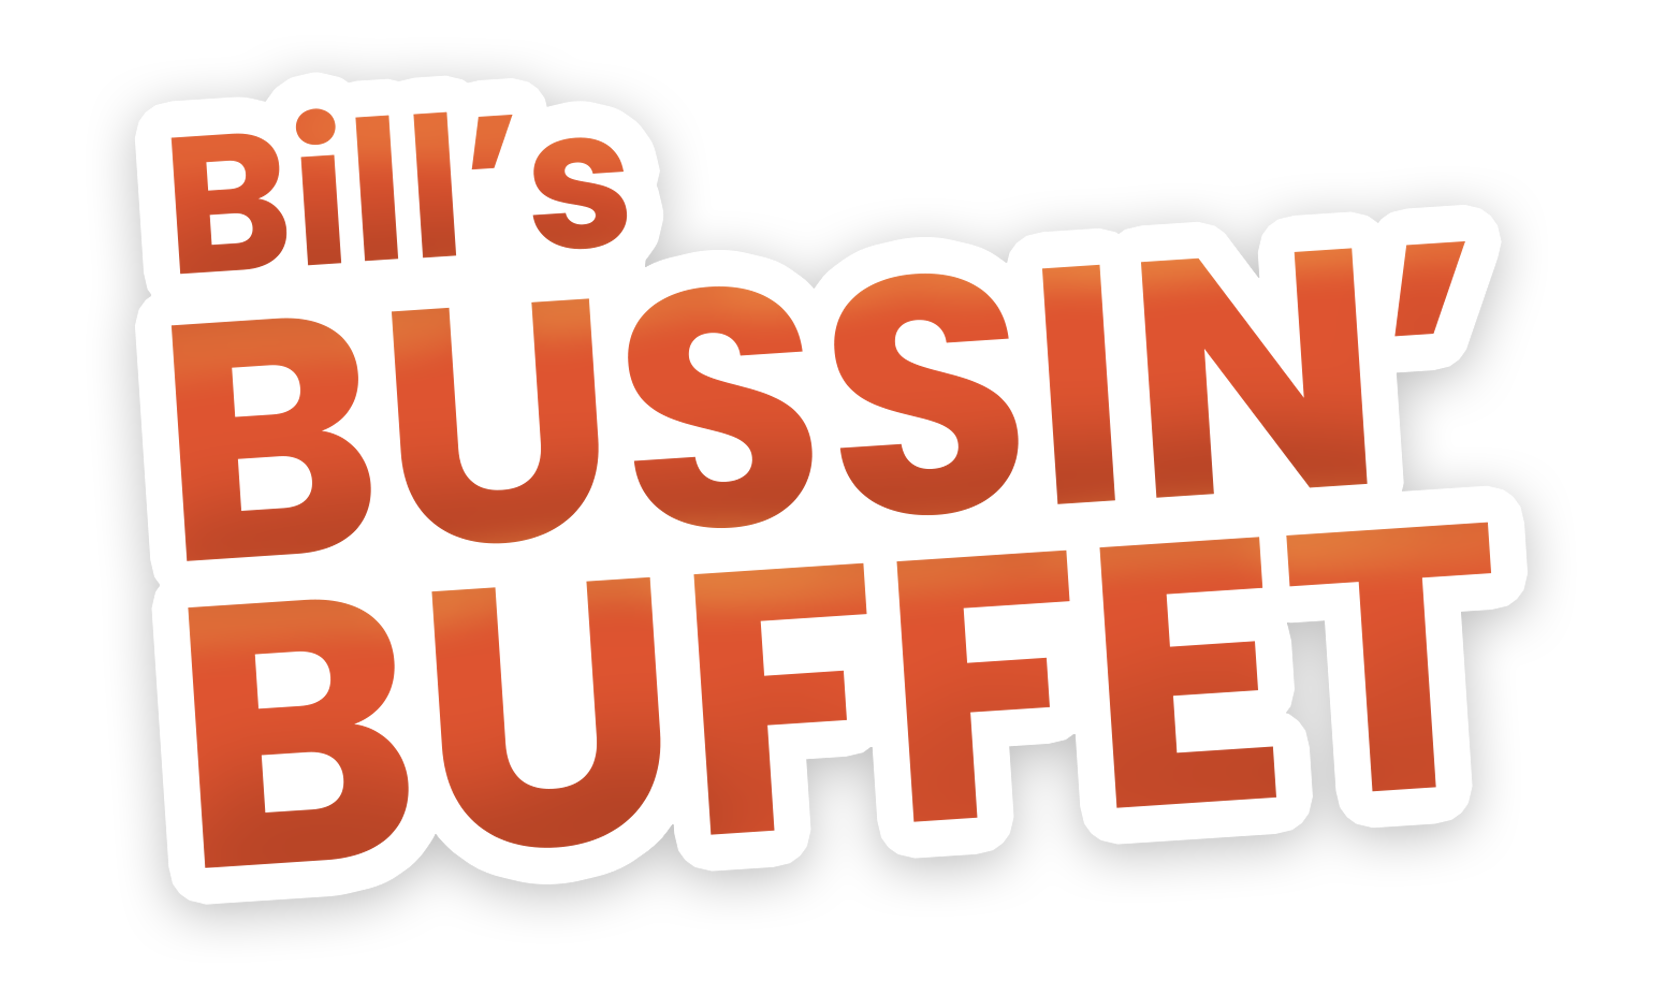 Bill's Bussin' Buffet